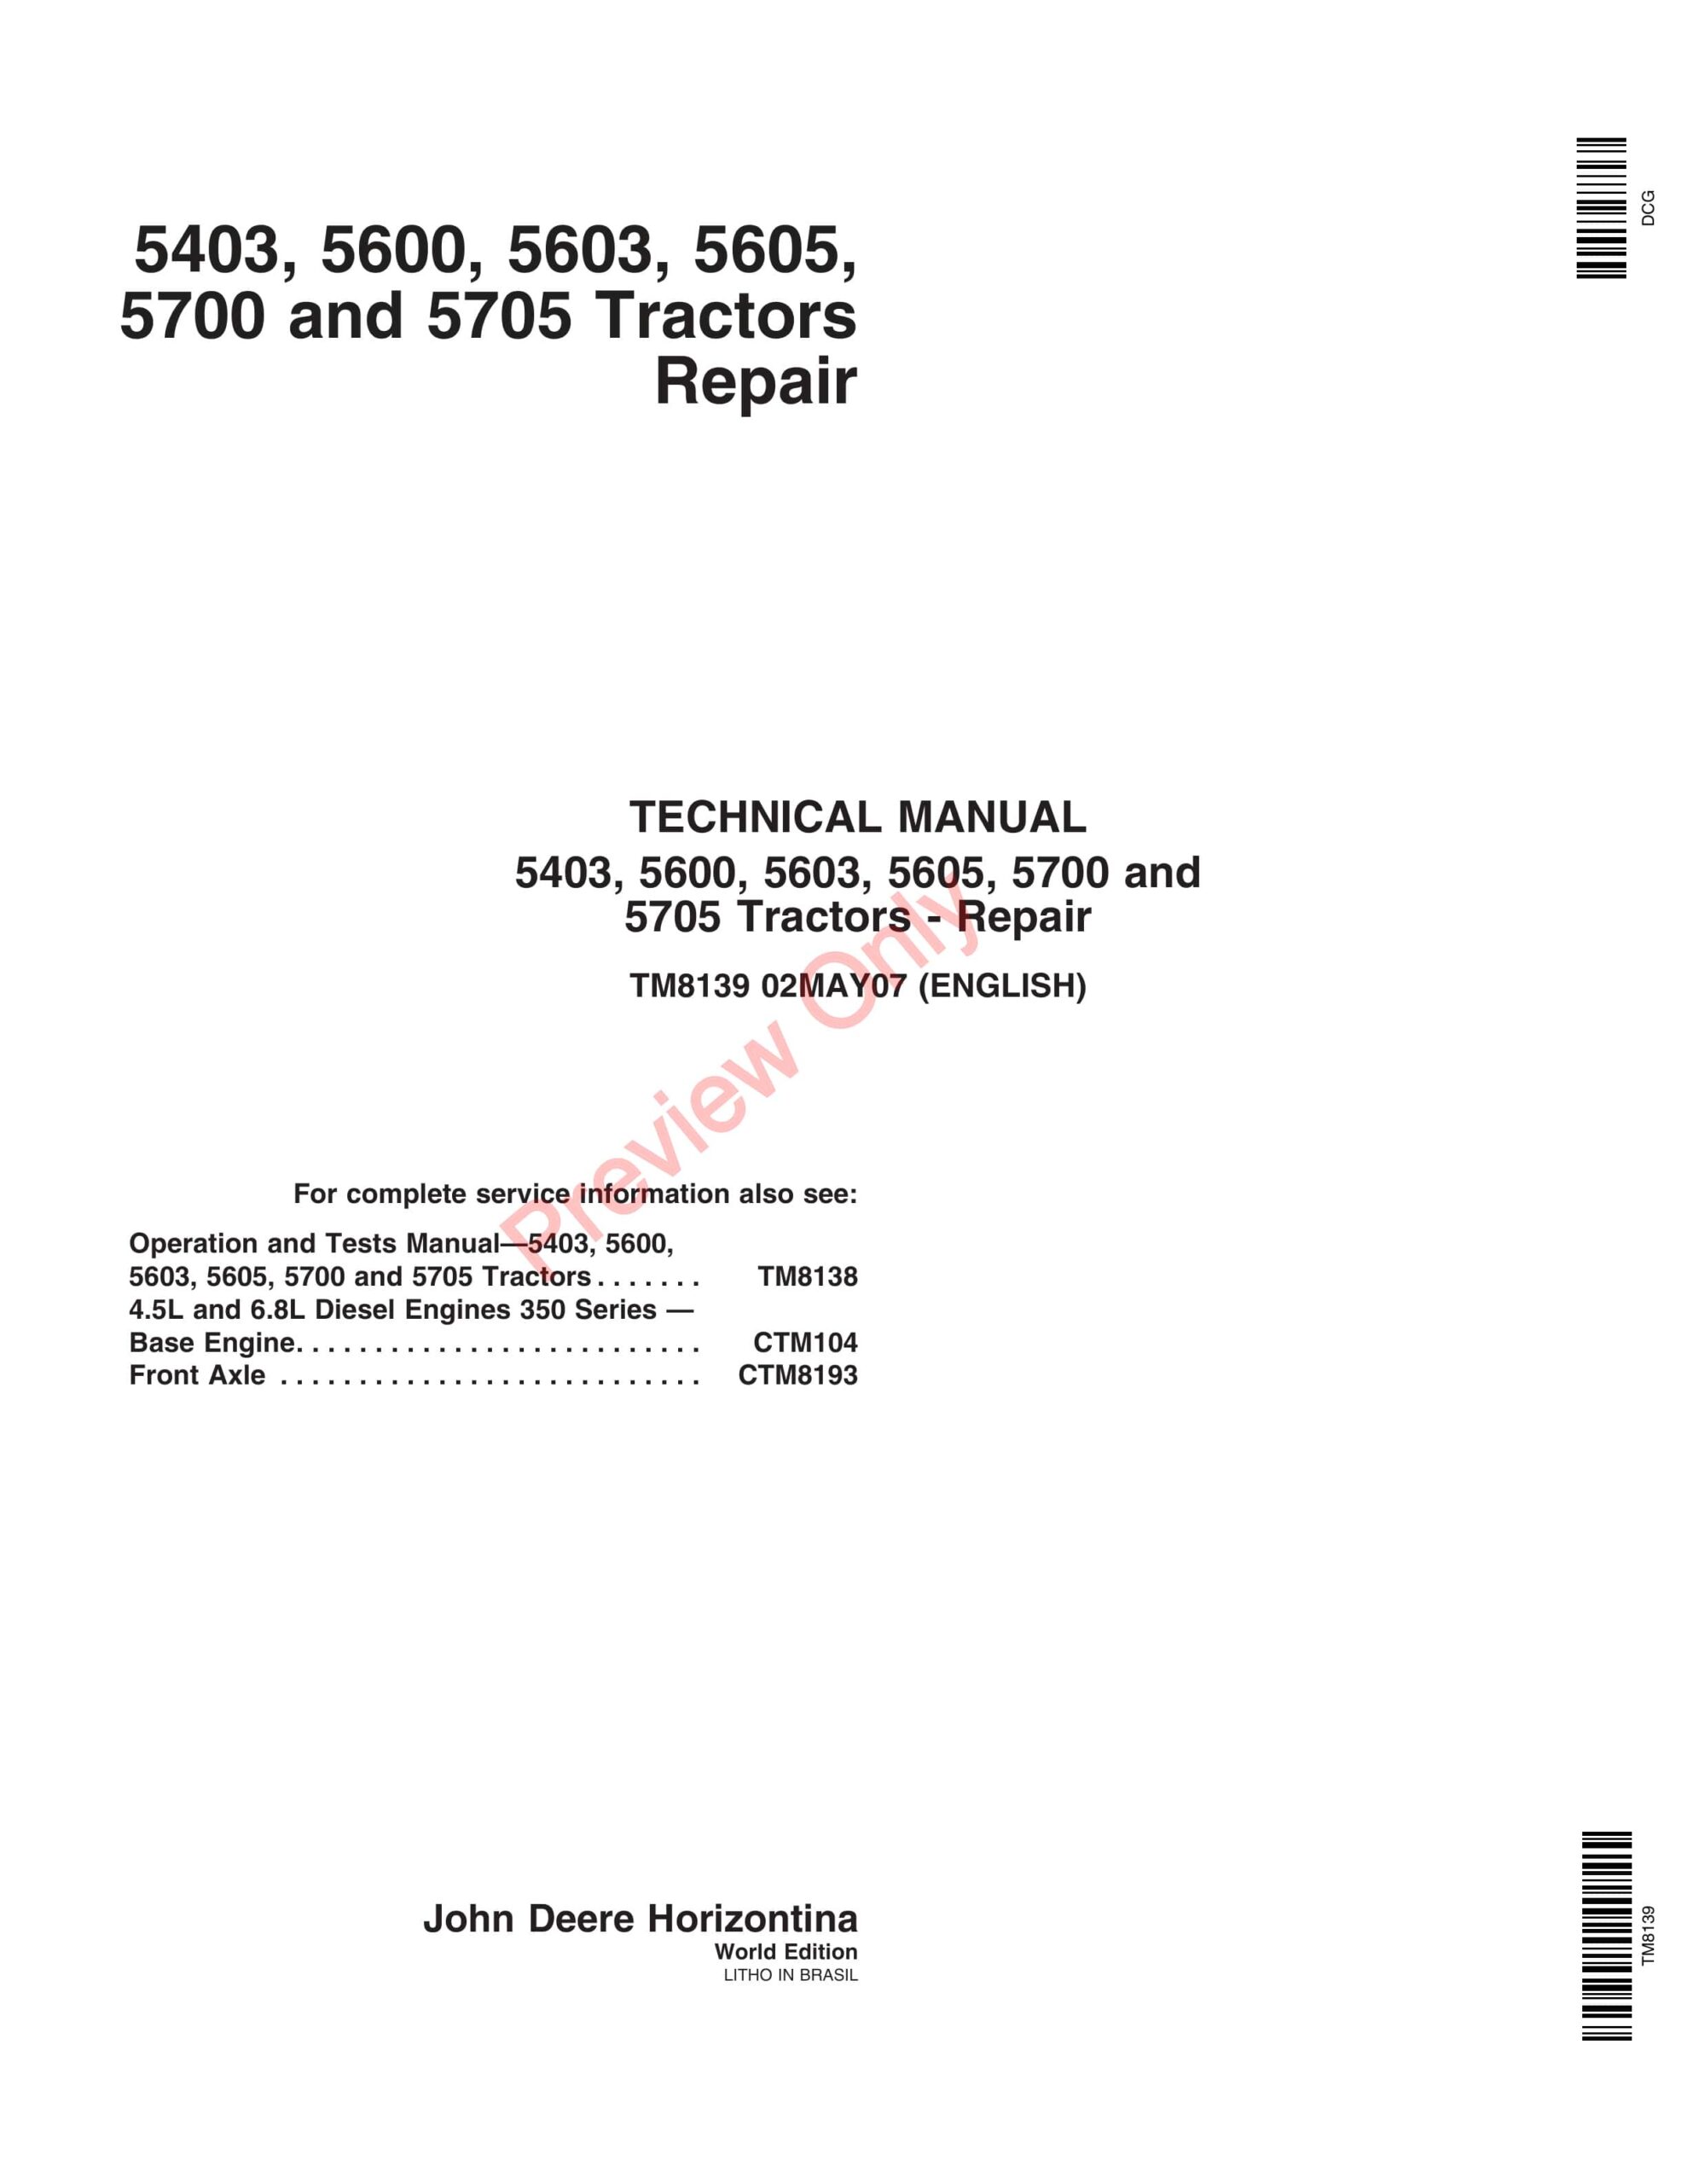 John Deere 5403, 5600, 5603, 5605, 5700, 5705 Tractor Technical Manual TM8139 02MAY07-1